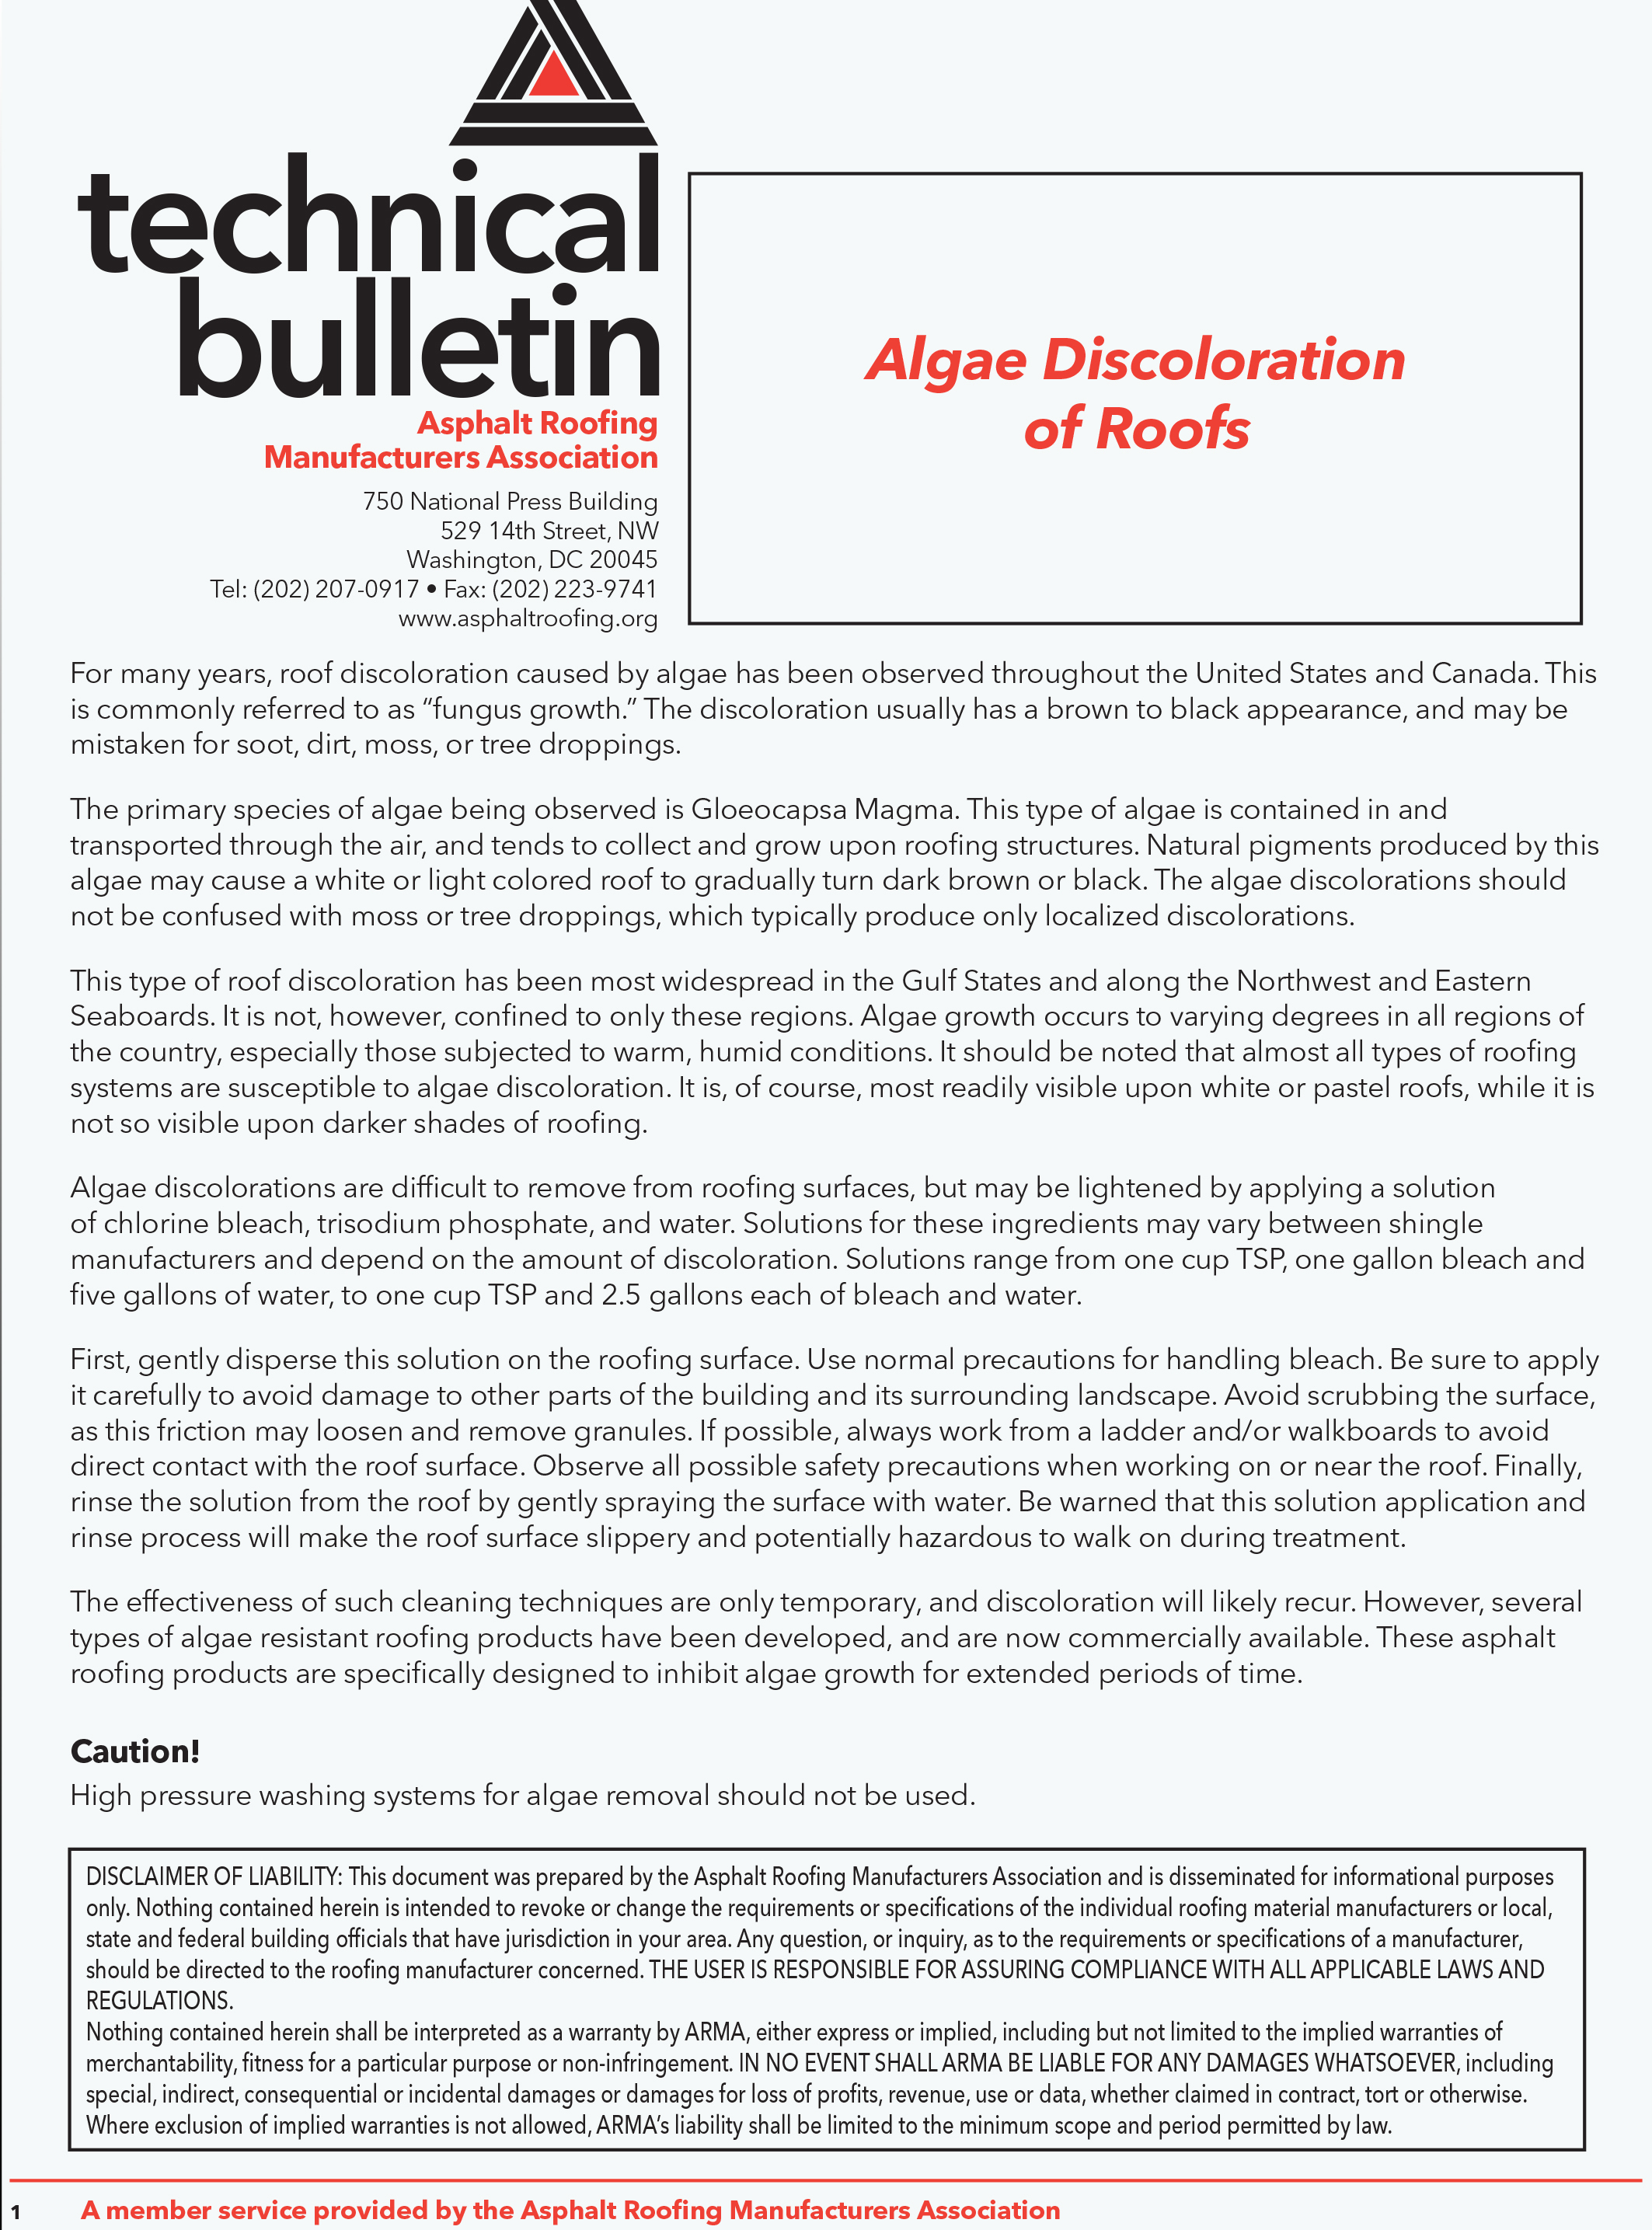 Algae-Discoloration-of-Roofs---ARMA-Technical-Bulletin